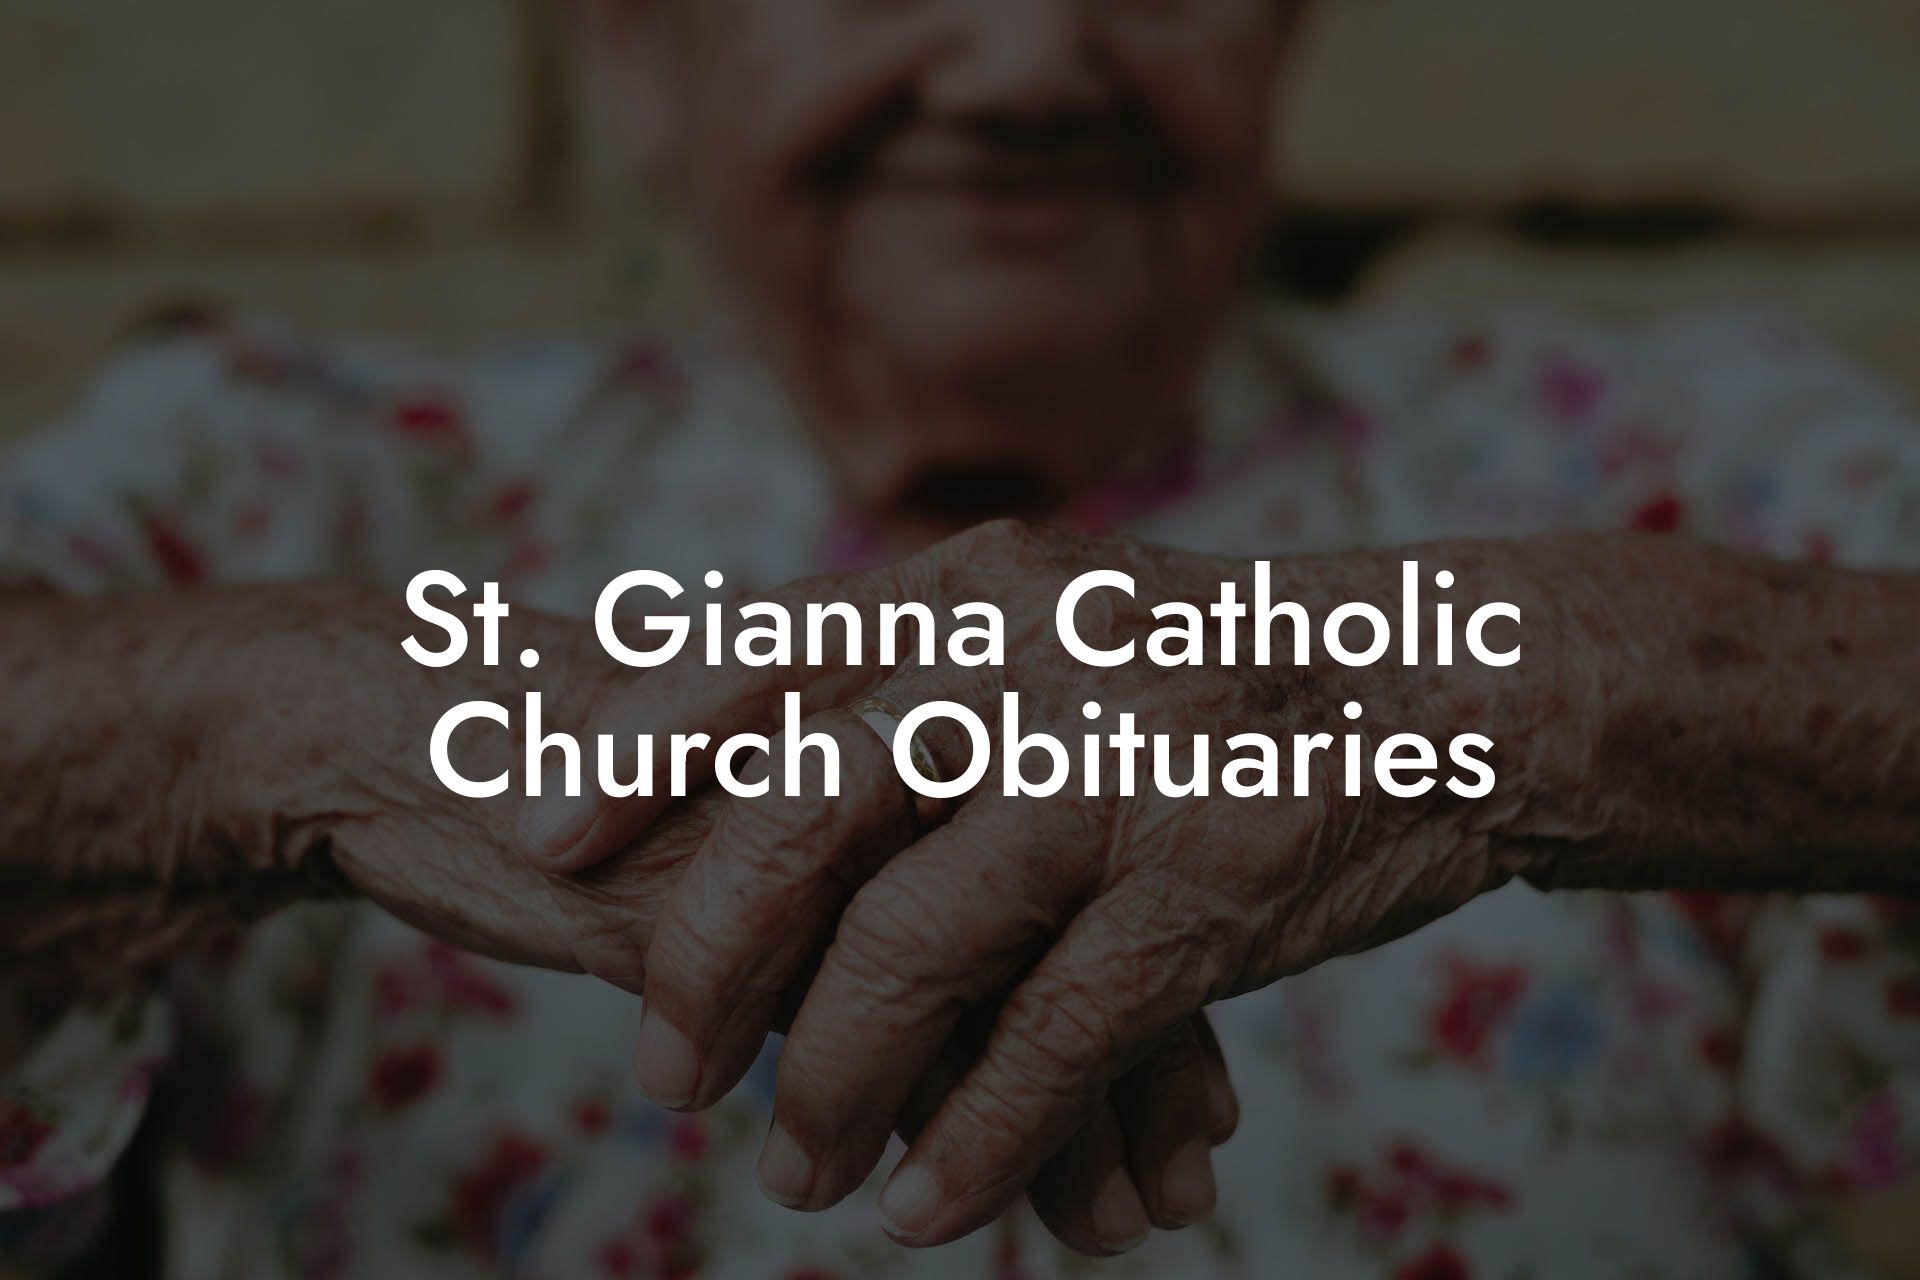 St. Gianna Catholic Church Obituaries